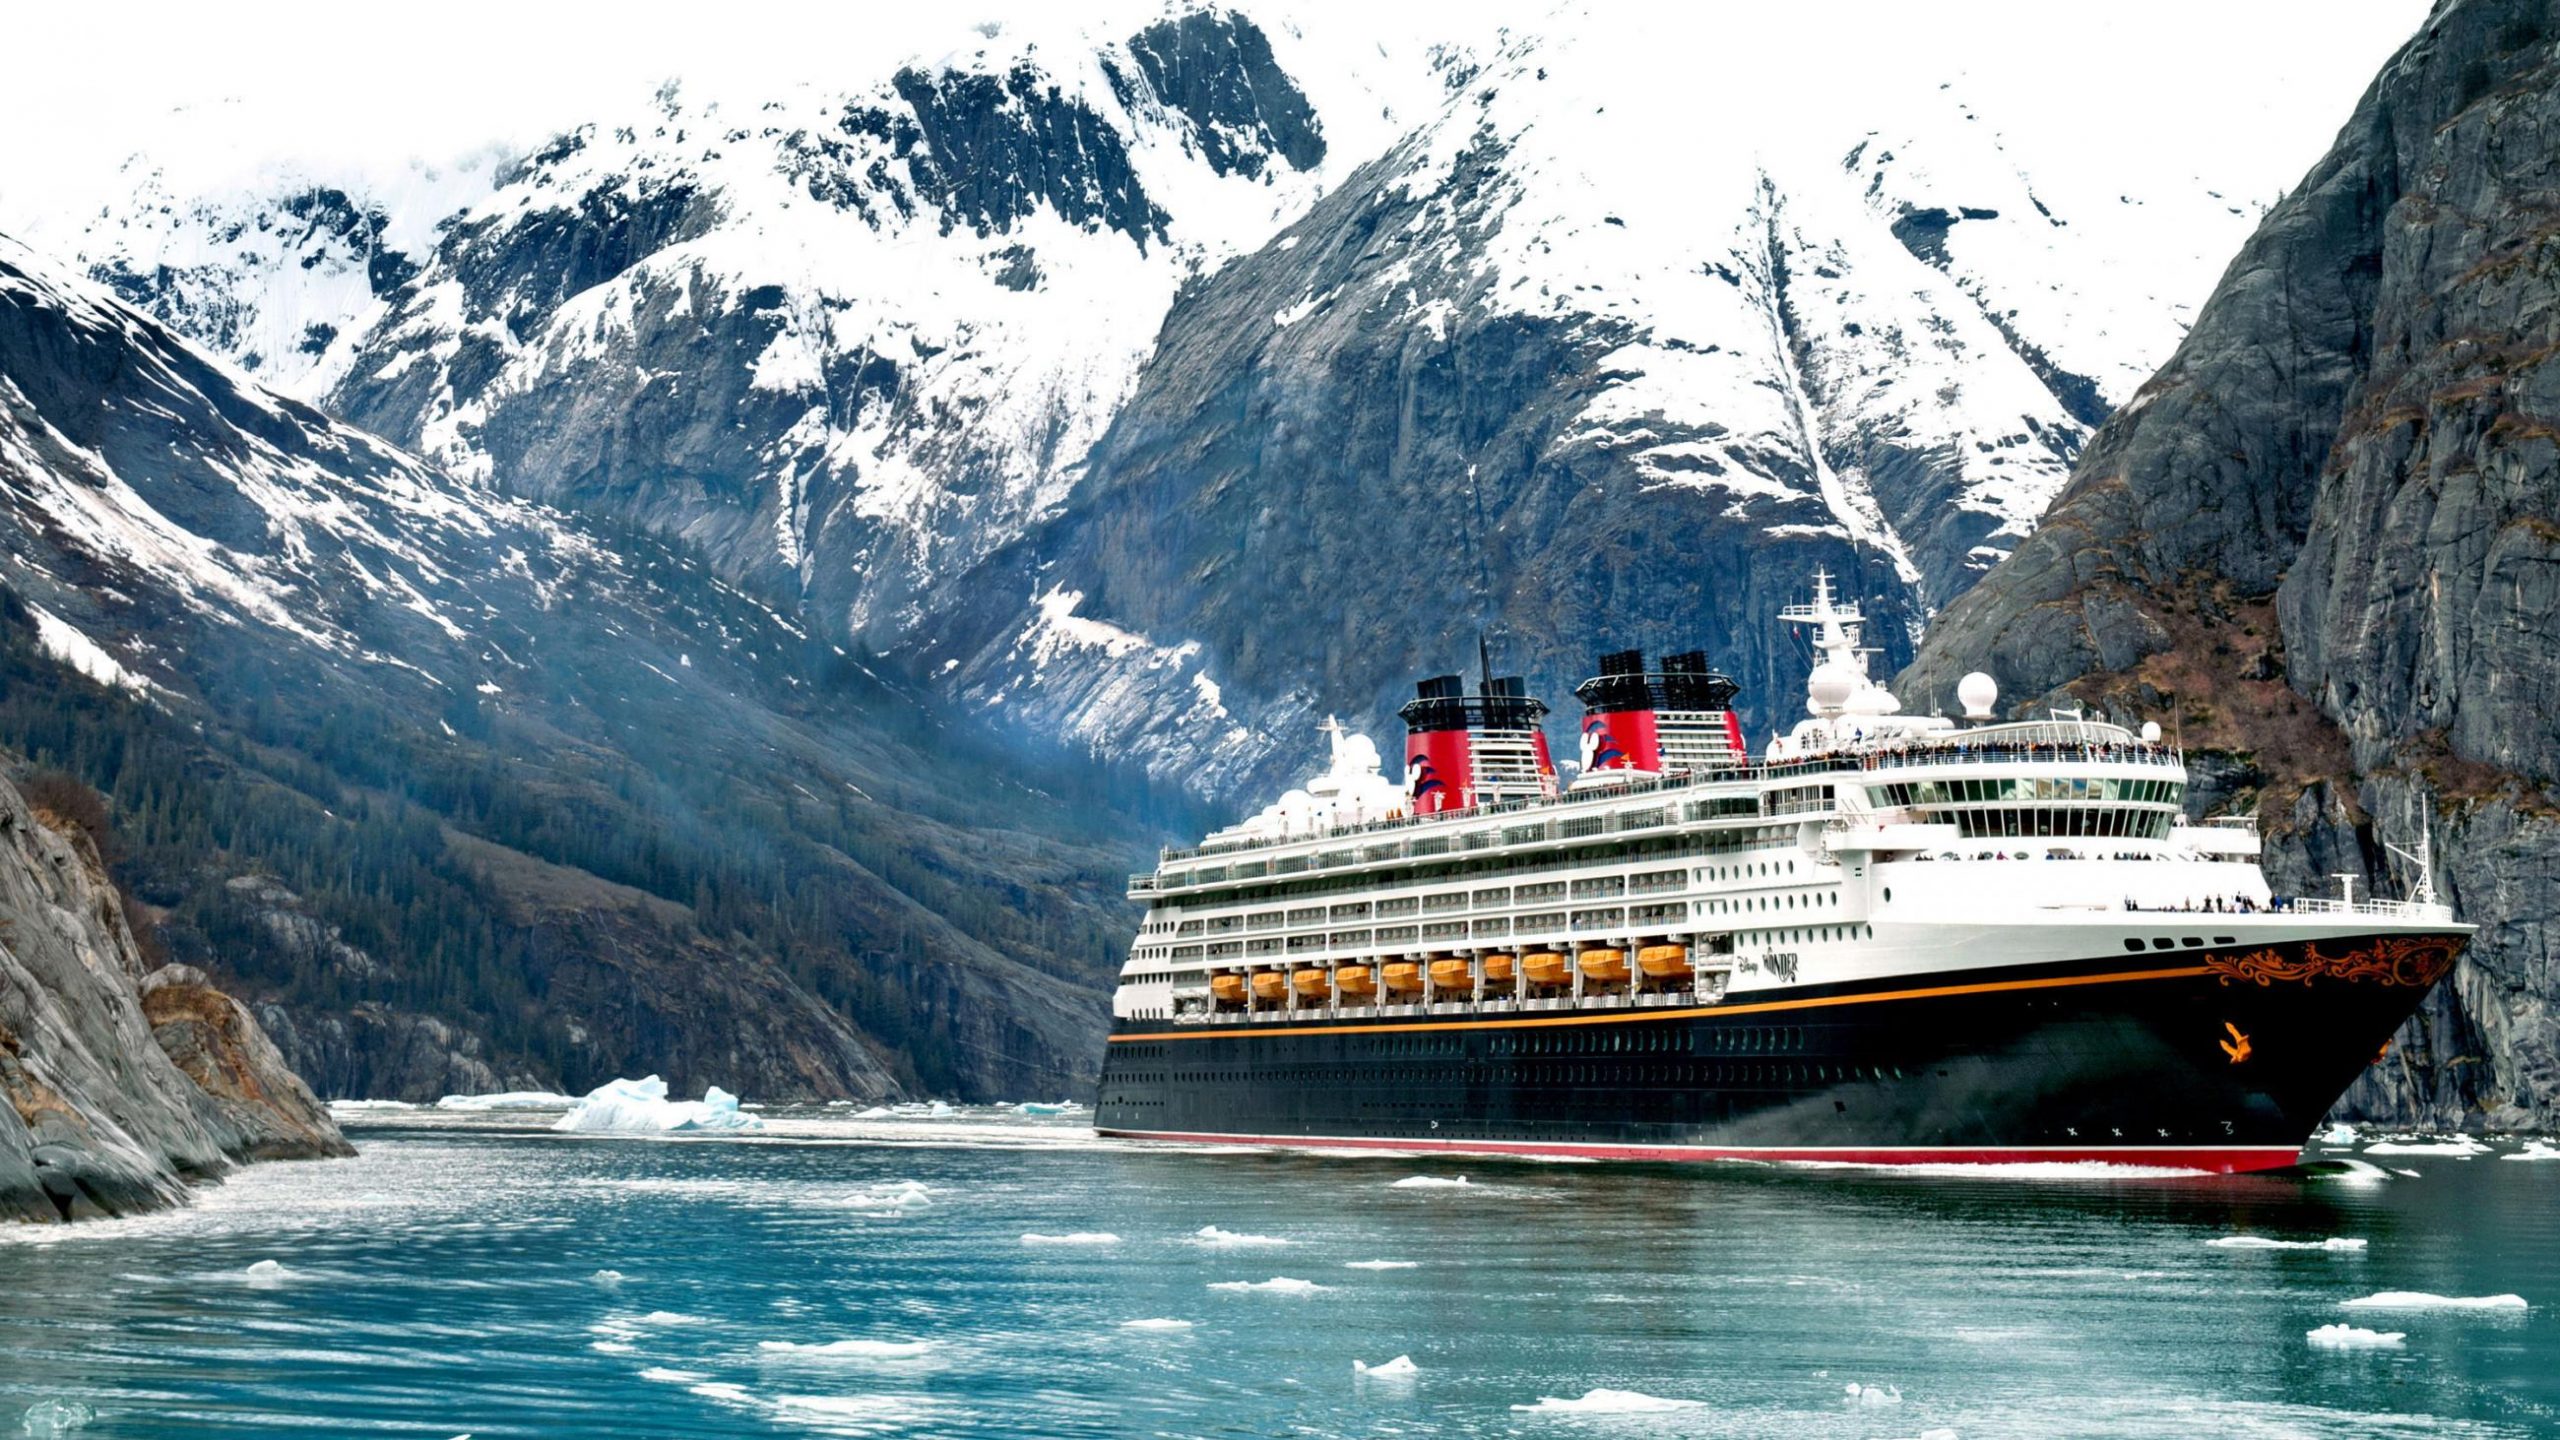 When Will Alaska Cruises Resume?